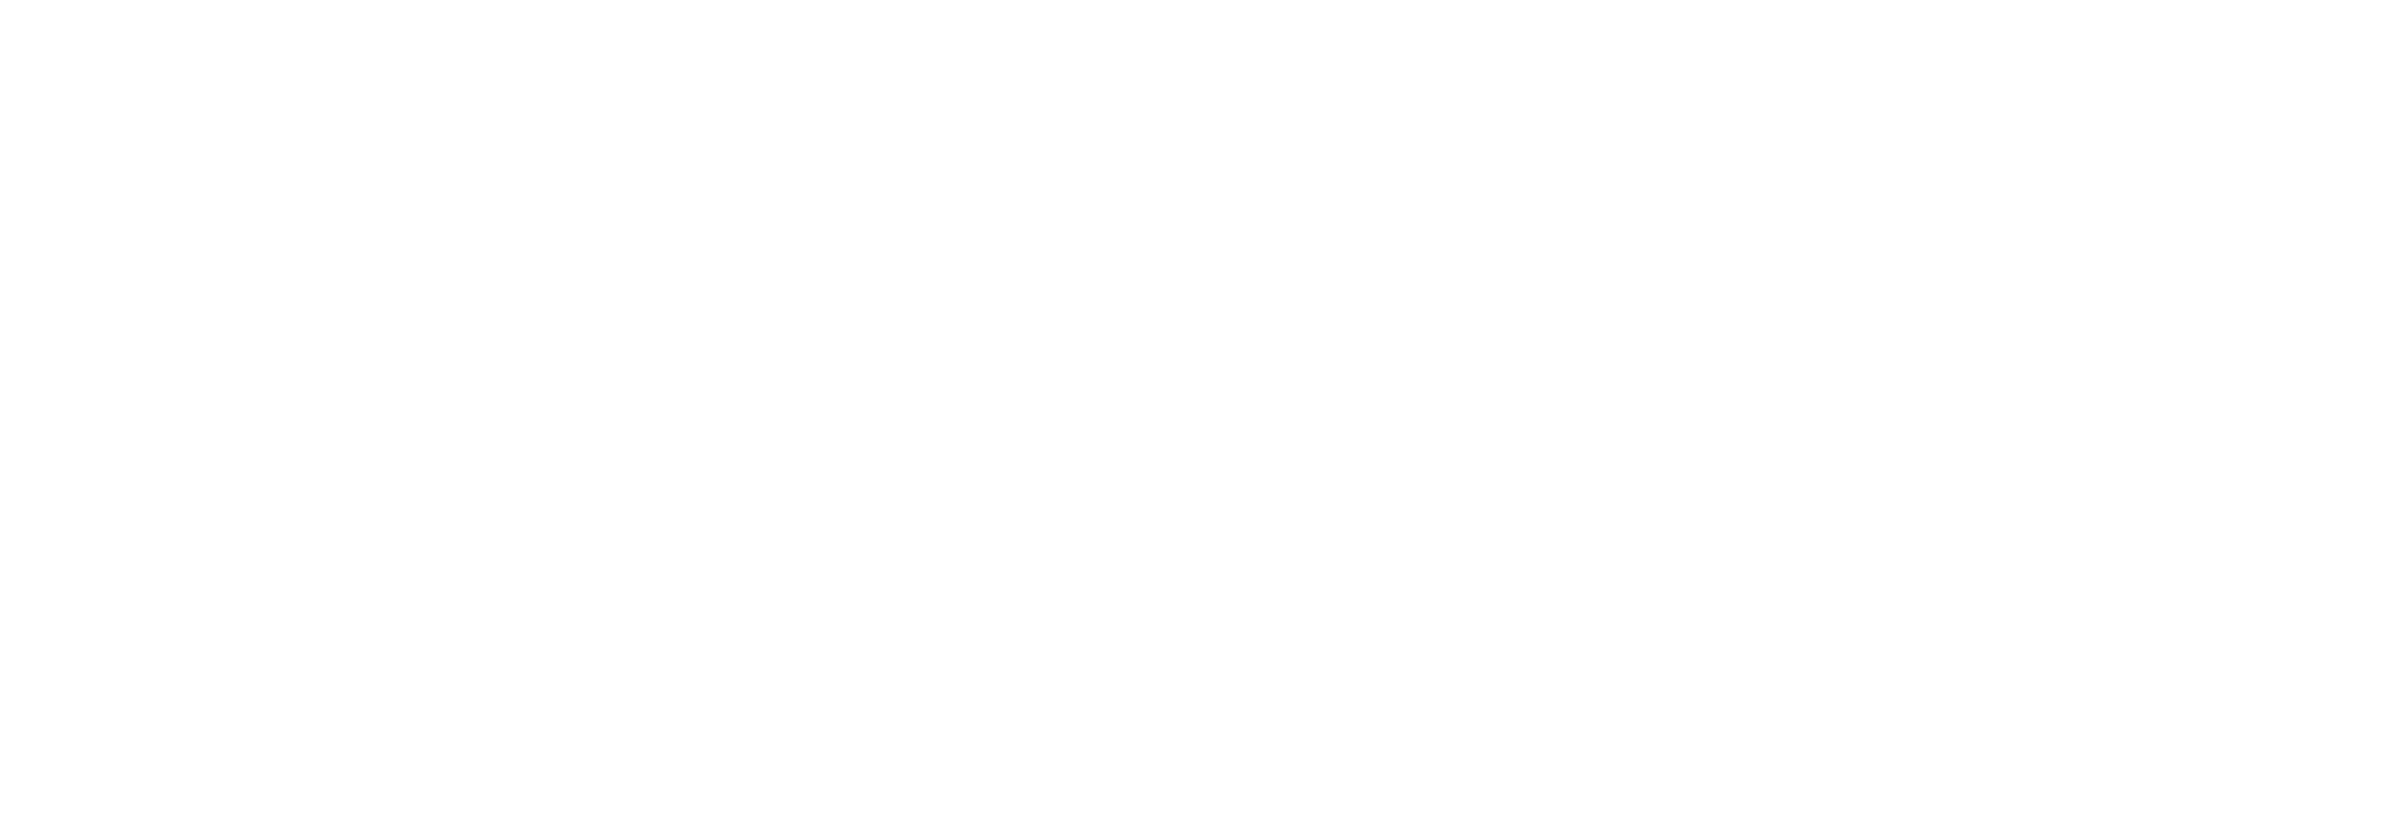 Rockwell Logo - Rockwell In Laguna - Logo-orig - Rockwell